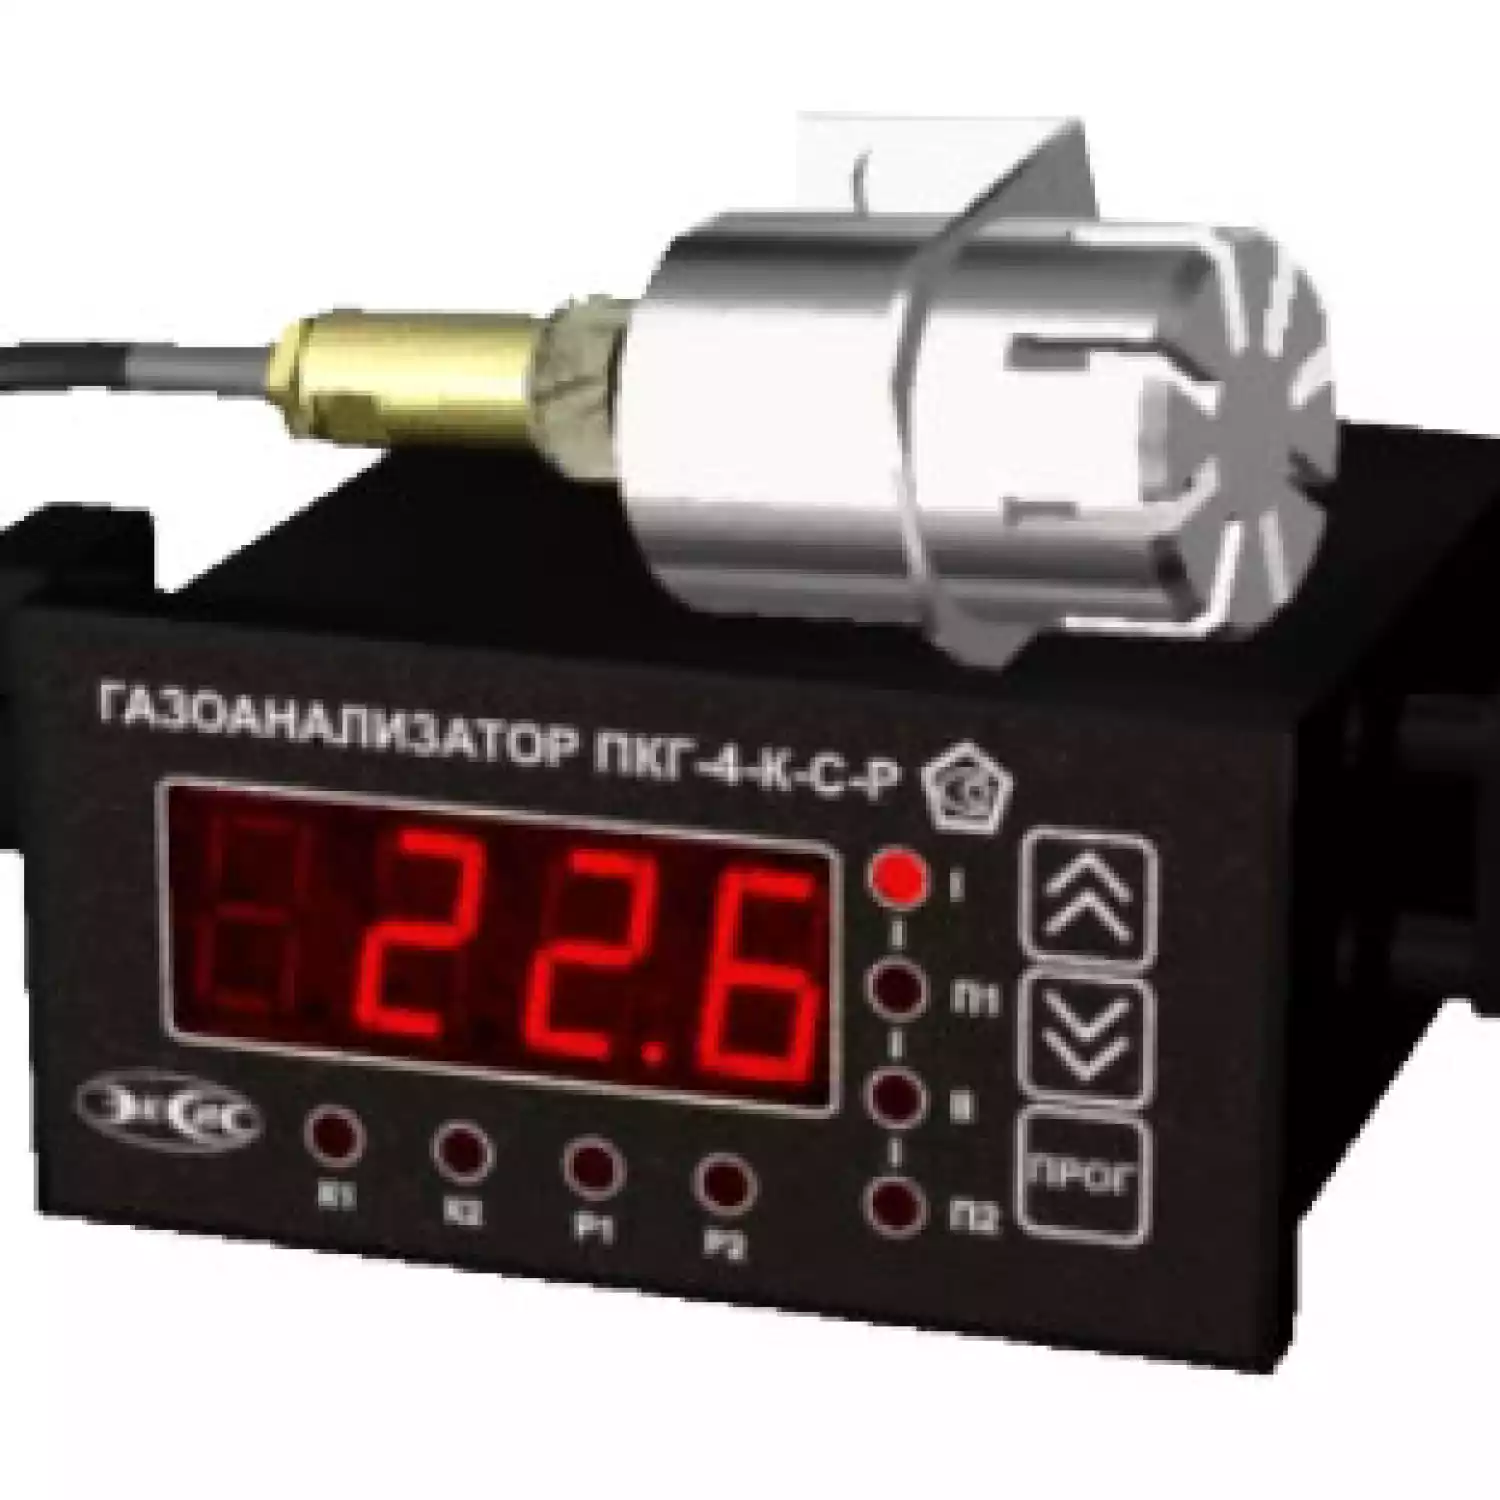 Газоанализатор кислорода ПКГ-4-К-С-Р-2А - 1